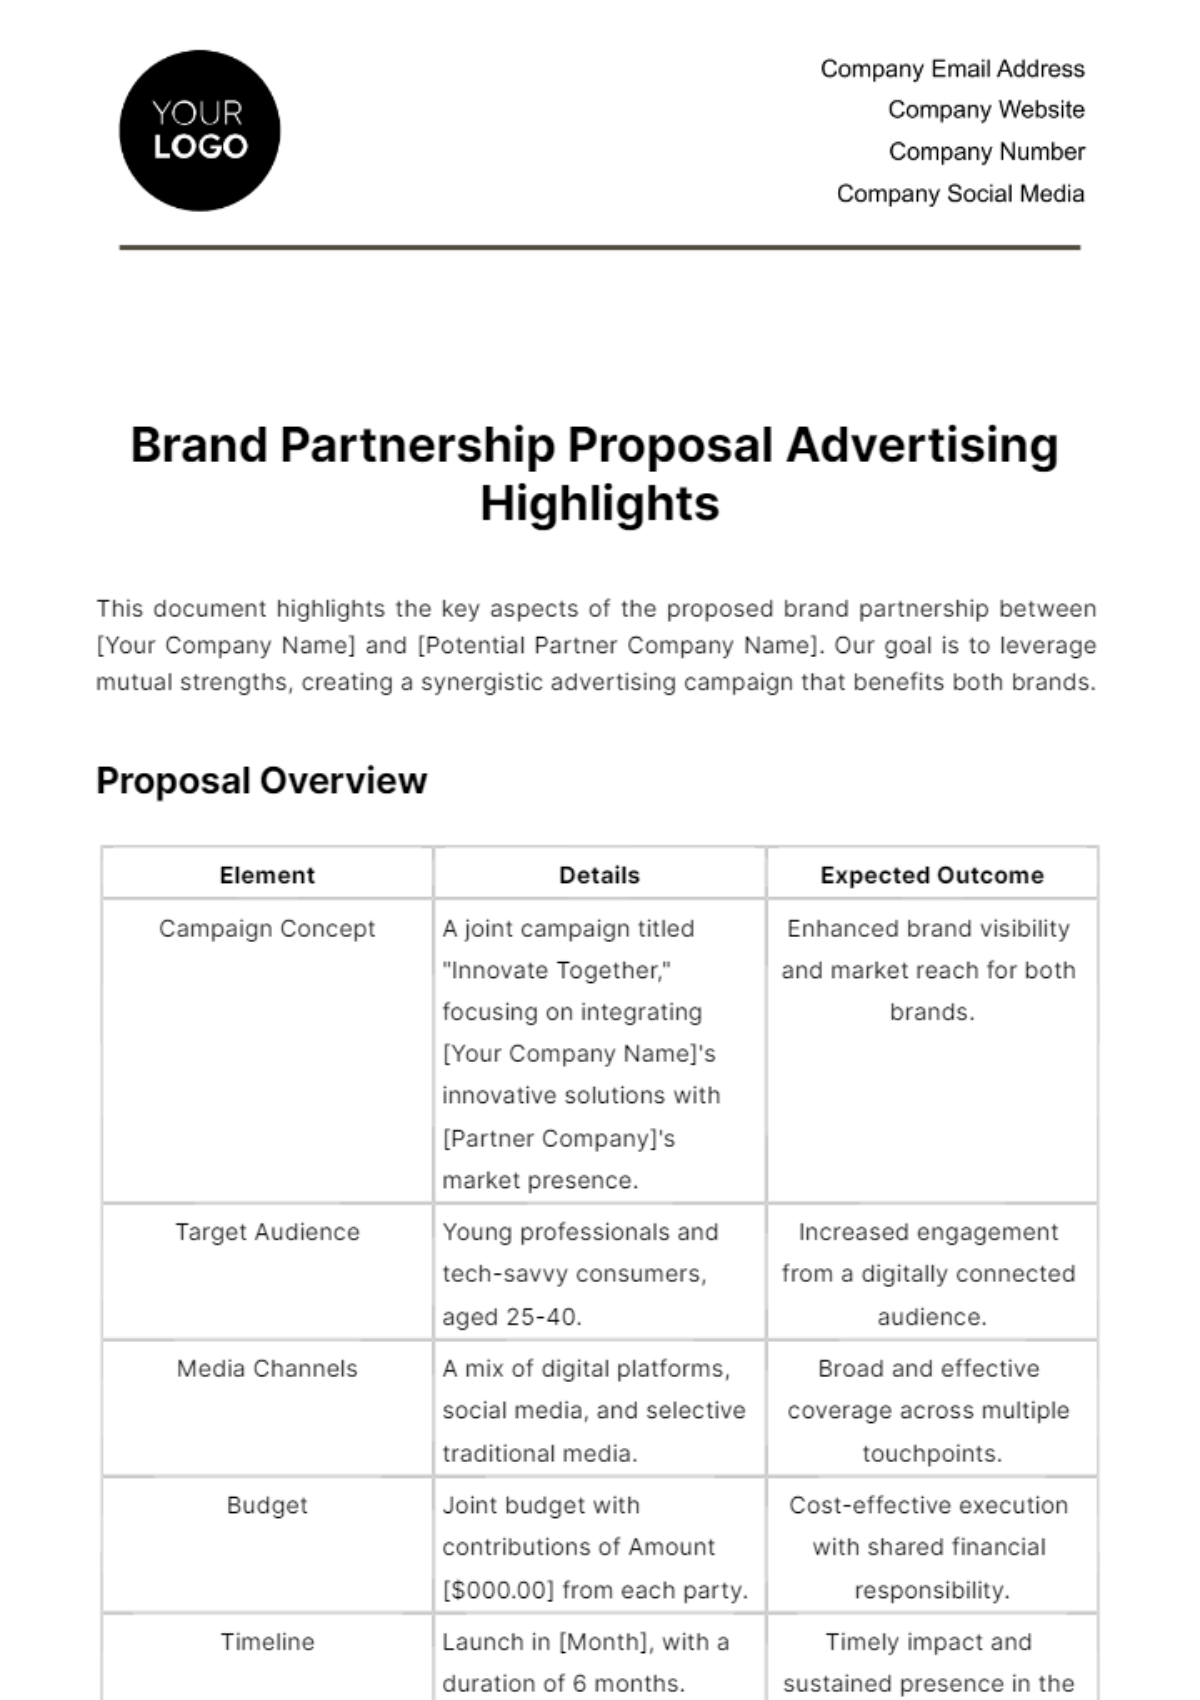 Free Brand Partnership Proposal Advertising Highlights Template